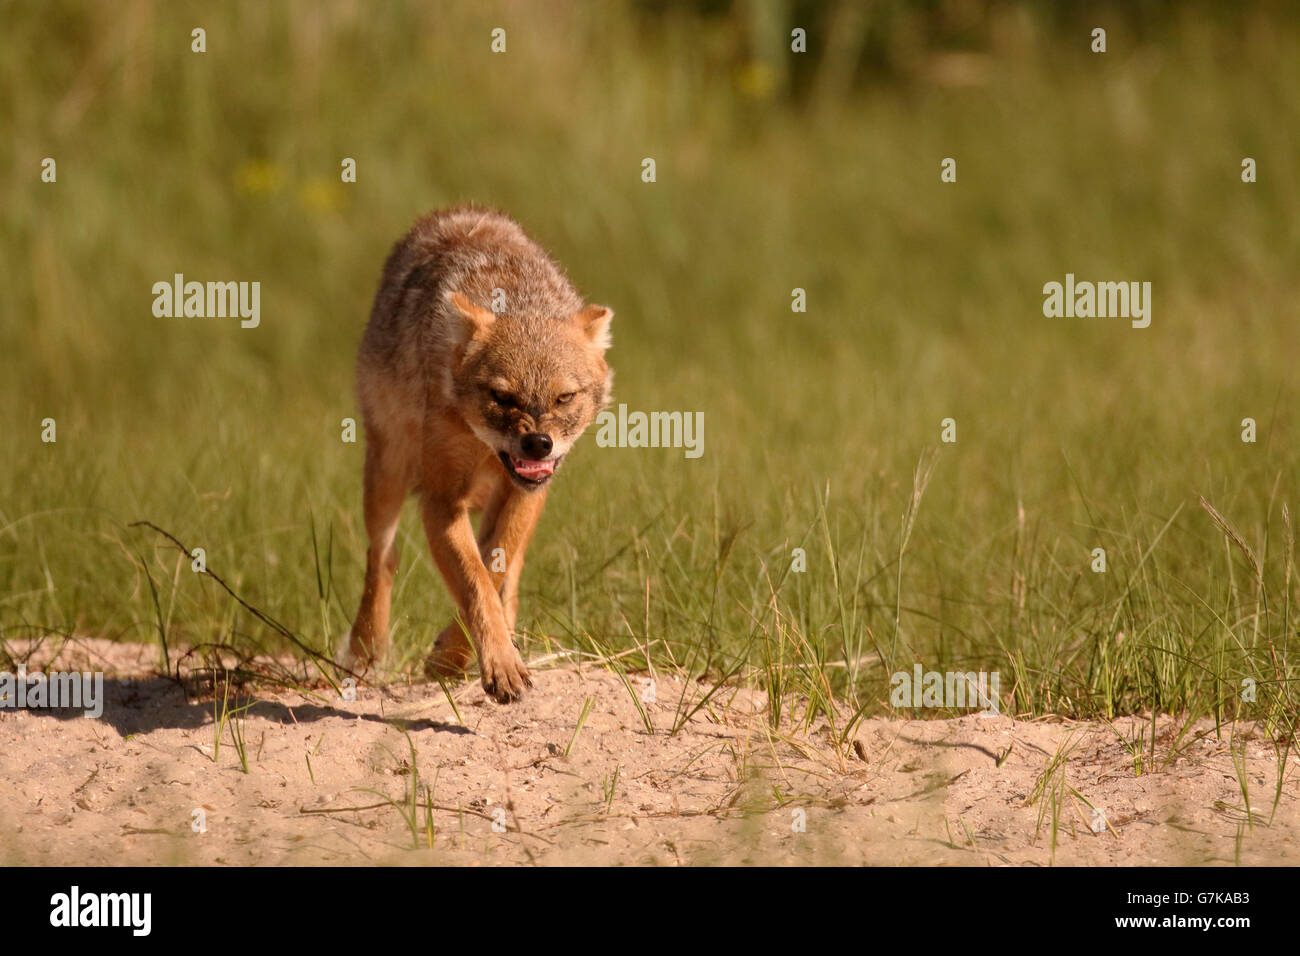 Europäische Schakal, Canis Aureus Moreoticus, einziges Säugetier auf Rasen, Rumänien, Juni 2016 Stockfoto